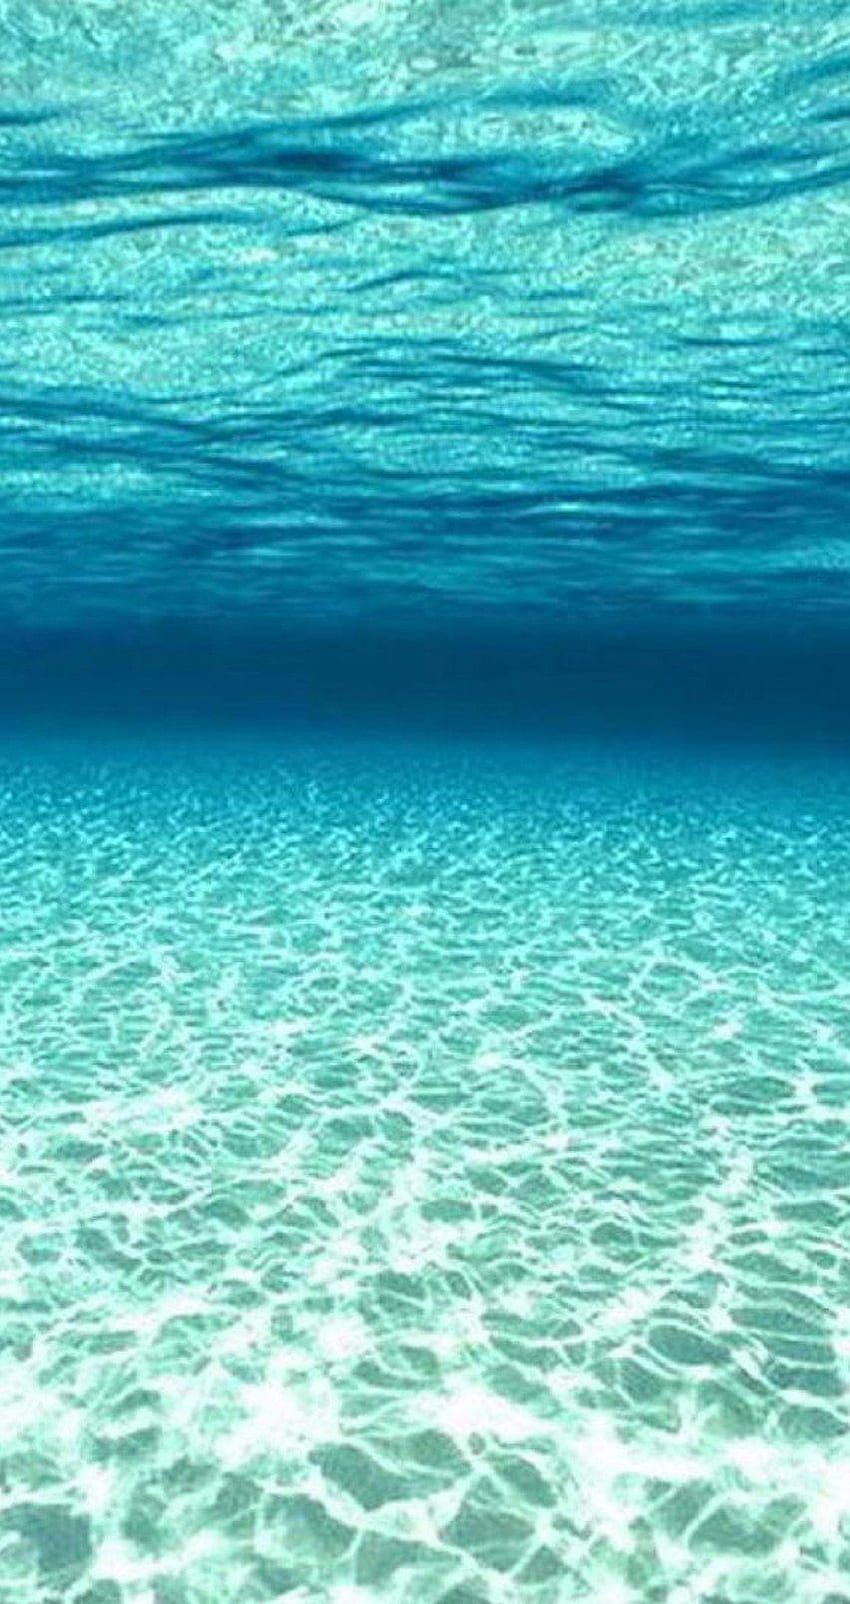 An underwater view of the ocean floor with clear blue water - Underwater